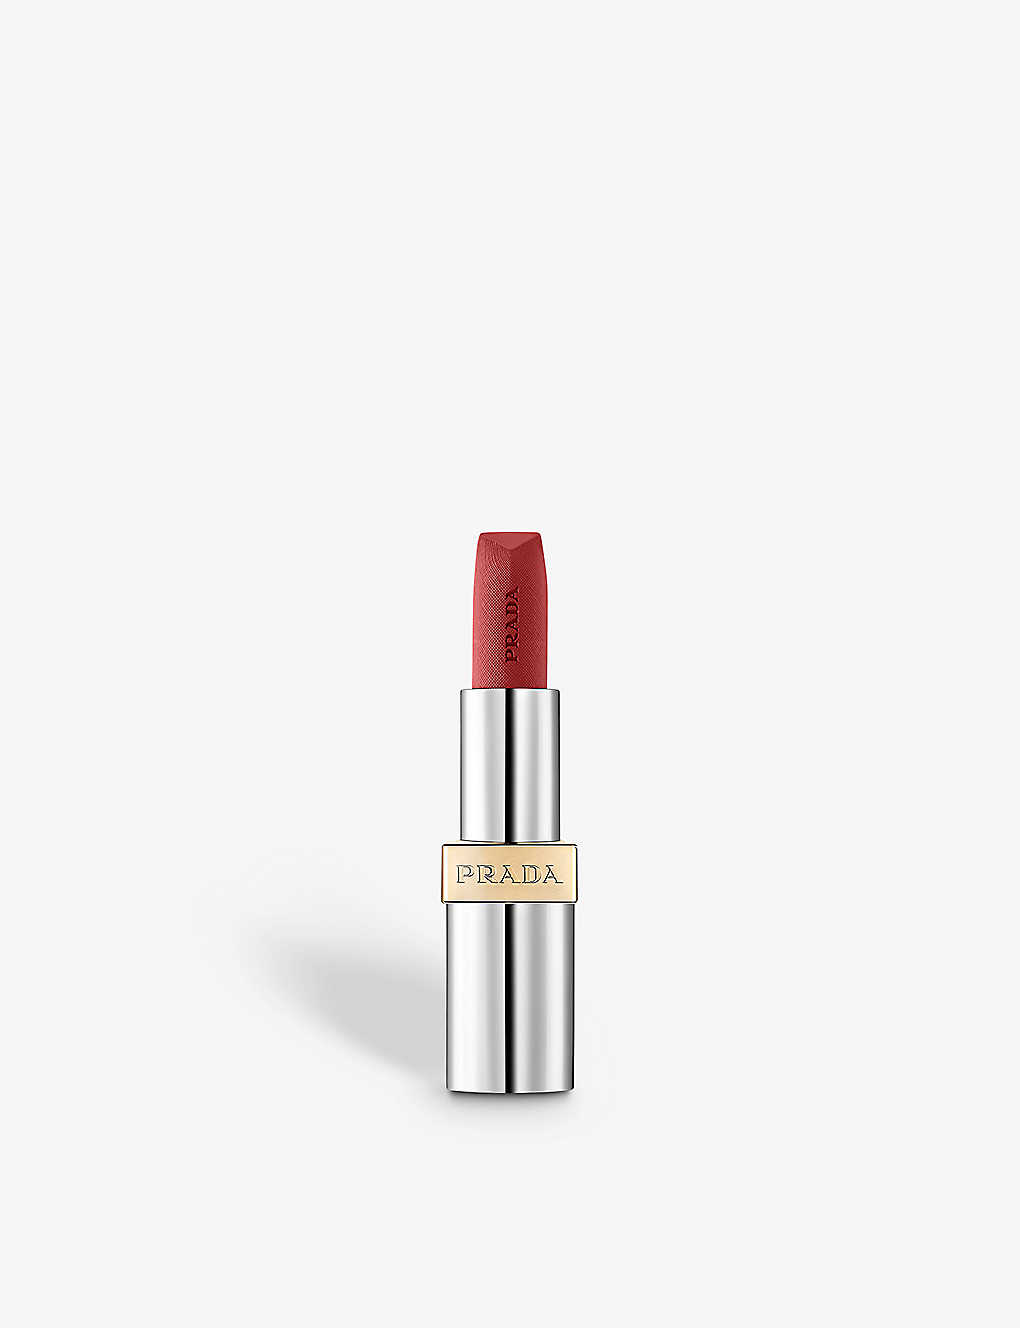 Prada Notte Hyper Matte Monochrome Refillable Lipstick 3.8g